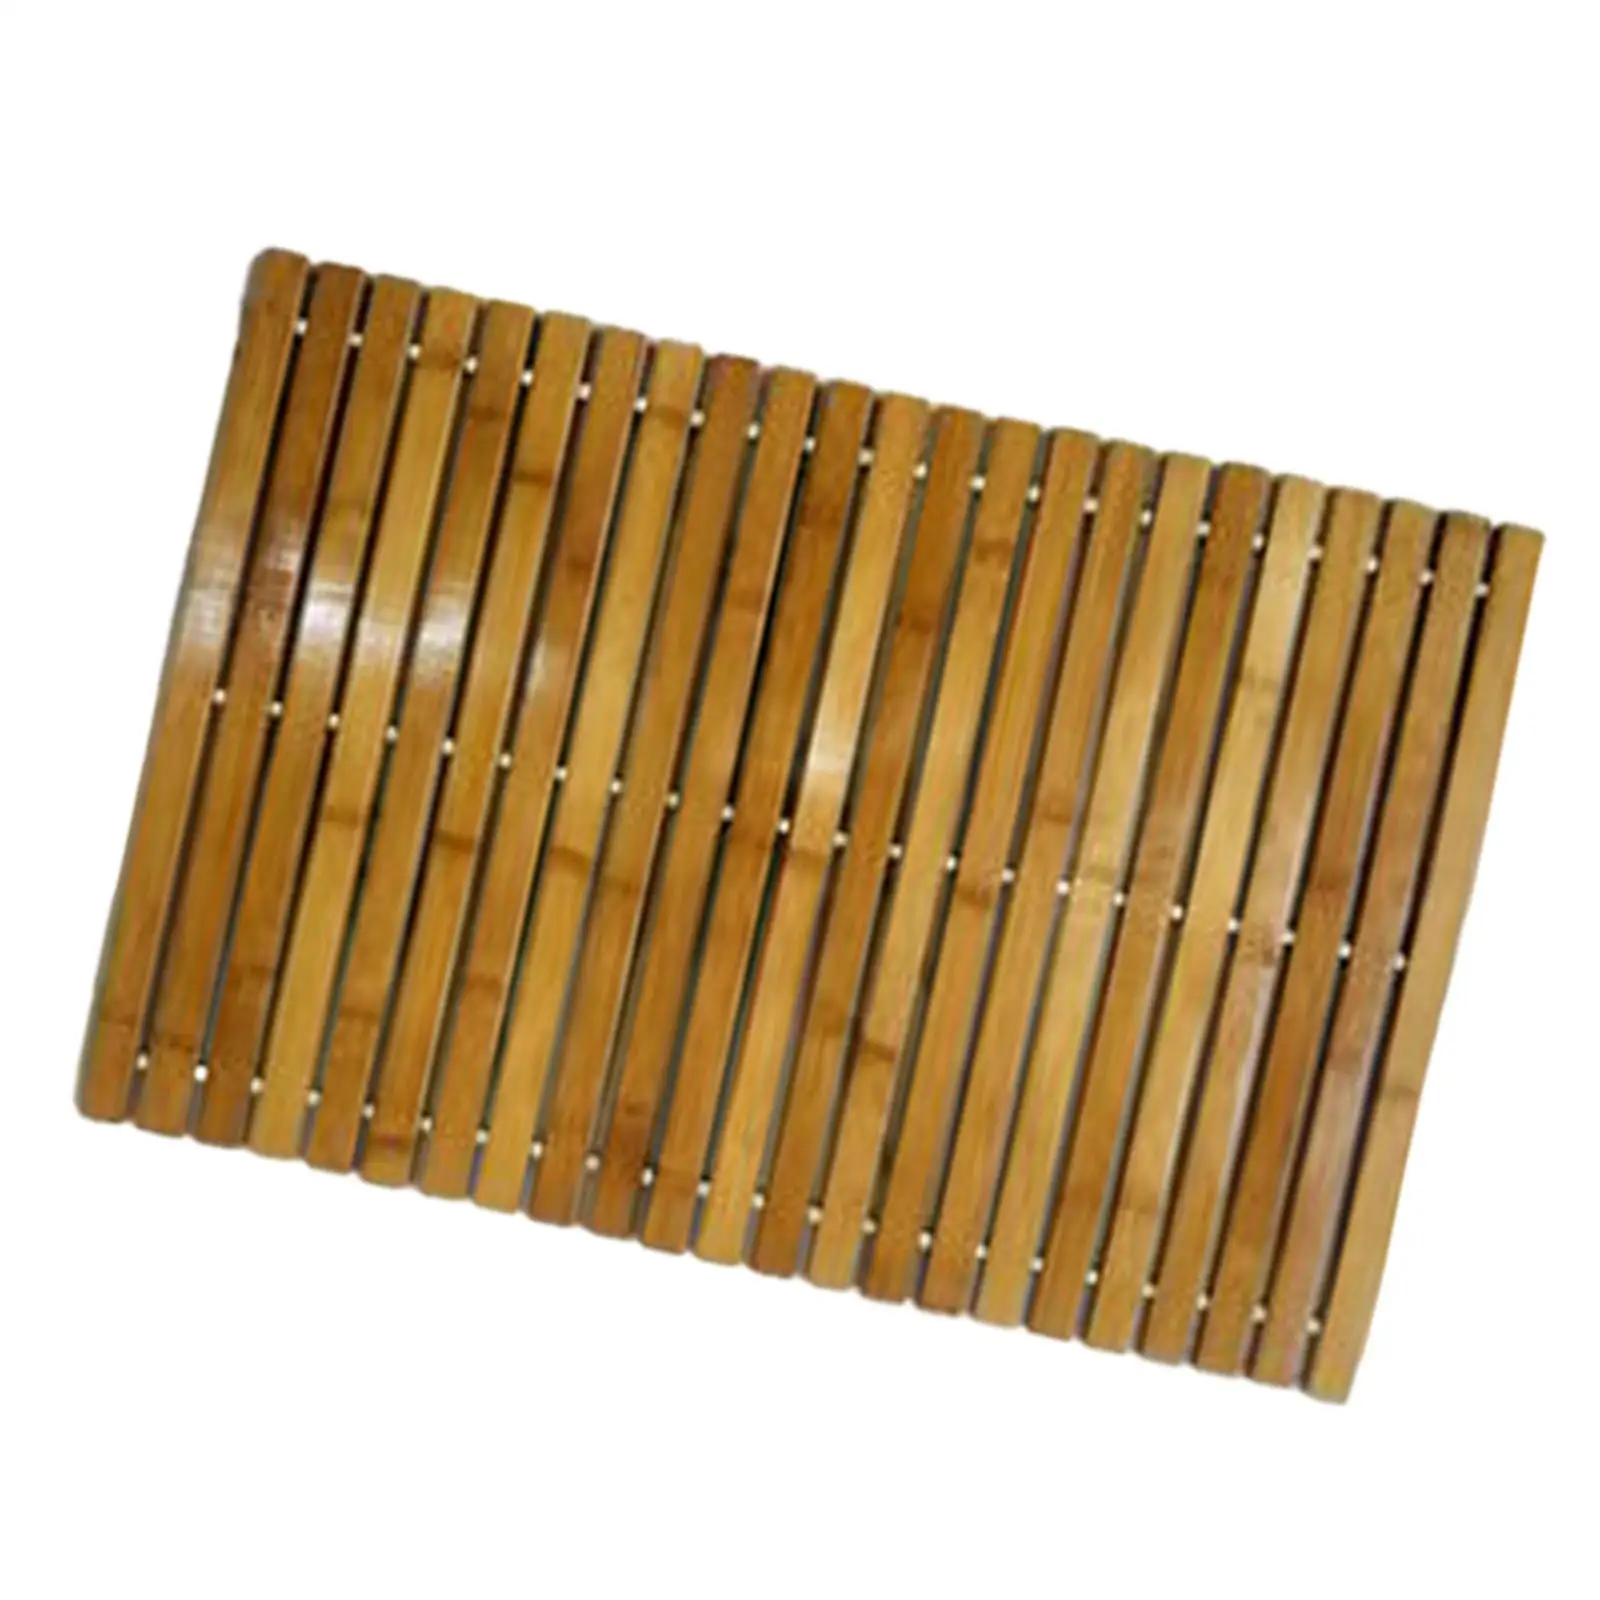 Bamboo Wood Strip Bath Mat Natural Floor Mat Indoor Use Non Slip Kitchen Rugs Bathmats for Bathroom Shower, 17.75x23.62inch